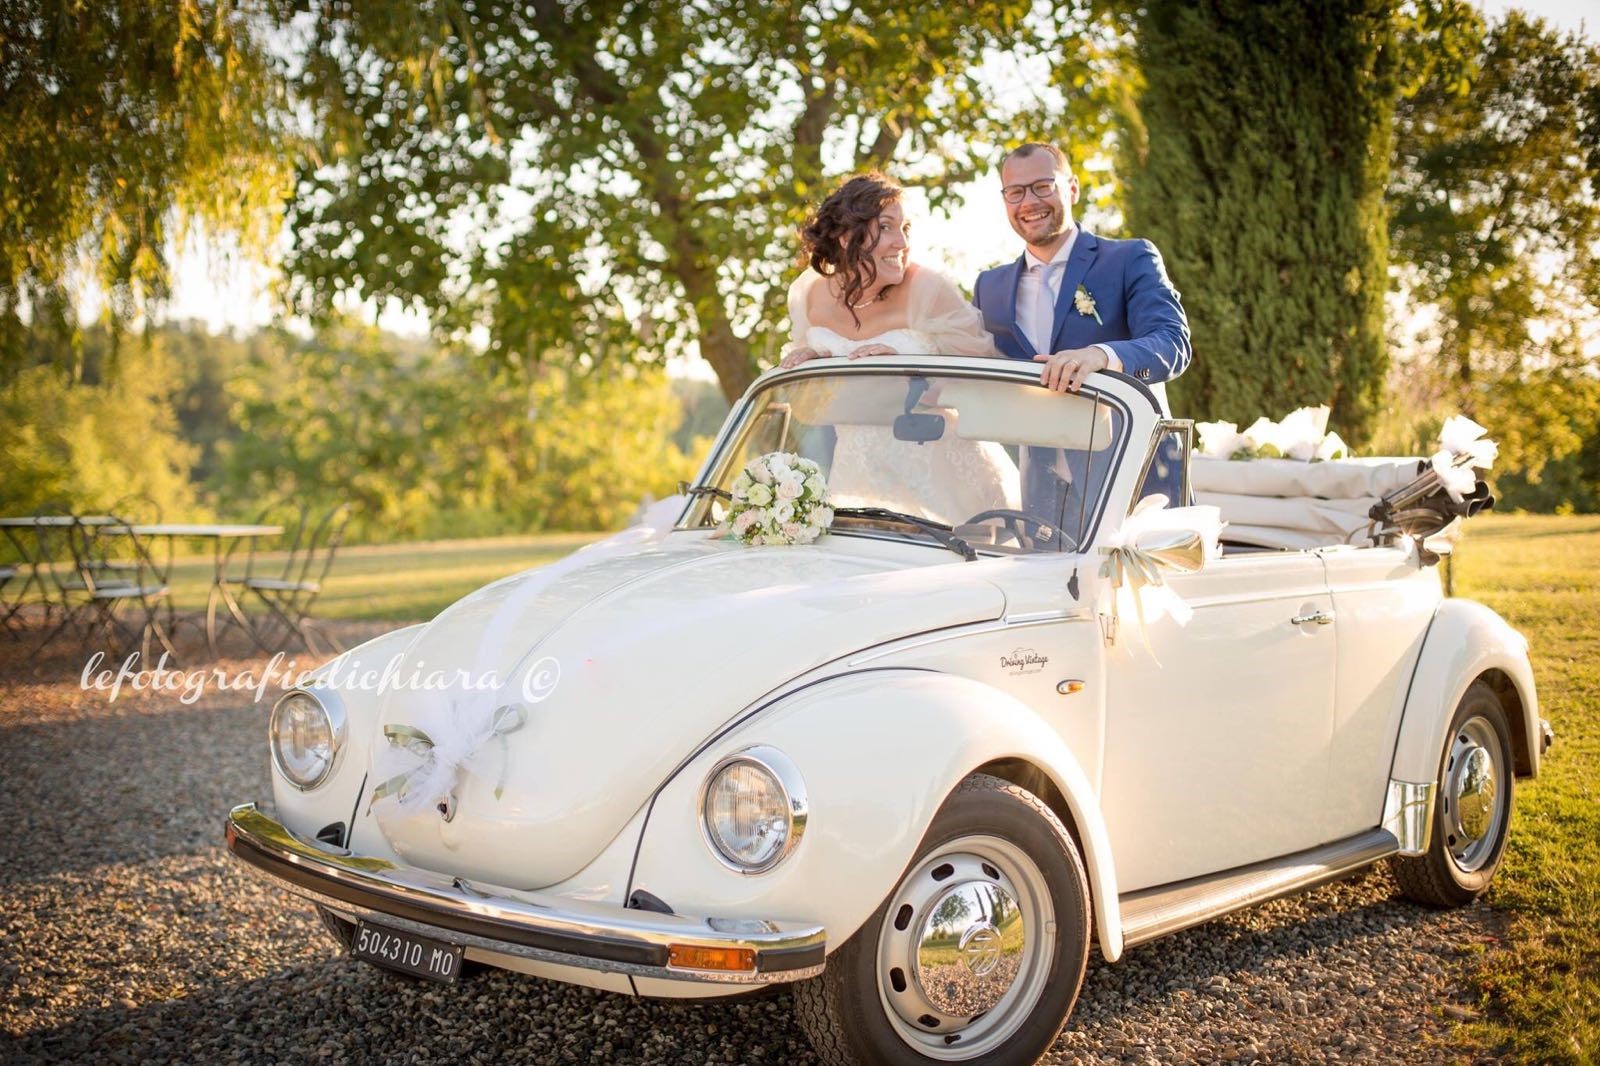 4-Alba-Maggiolone_Volkswagen_VW_matrimonio_cerimonia_evento_auto-depoca_classic-car_wedding_events_ceremony.jpg